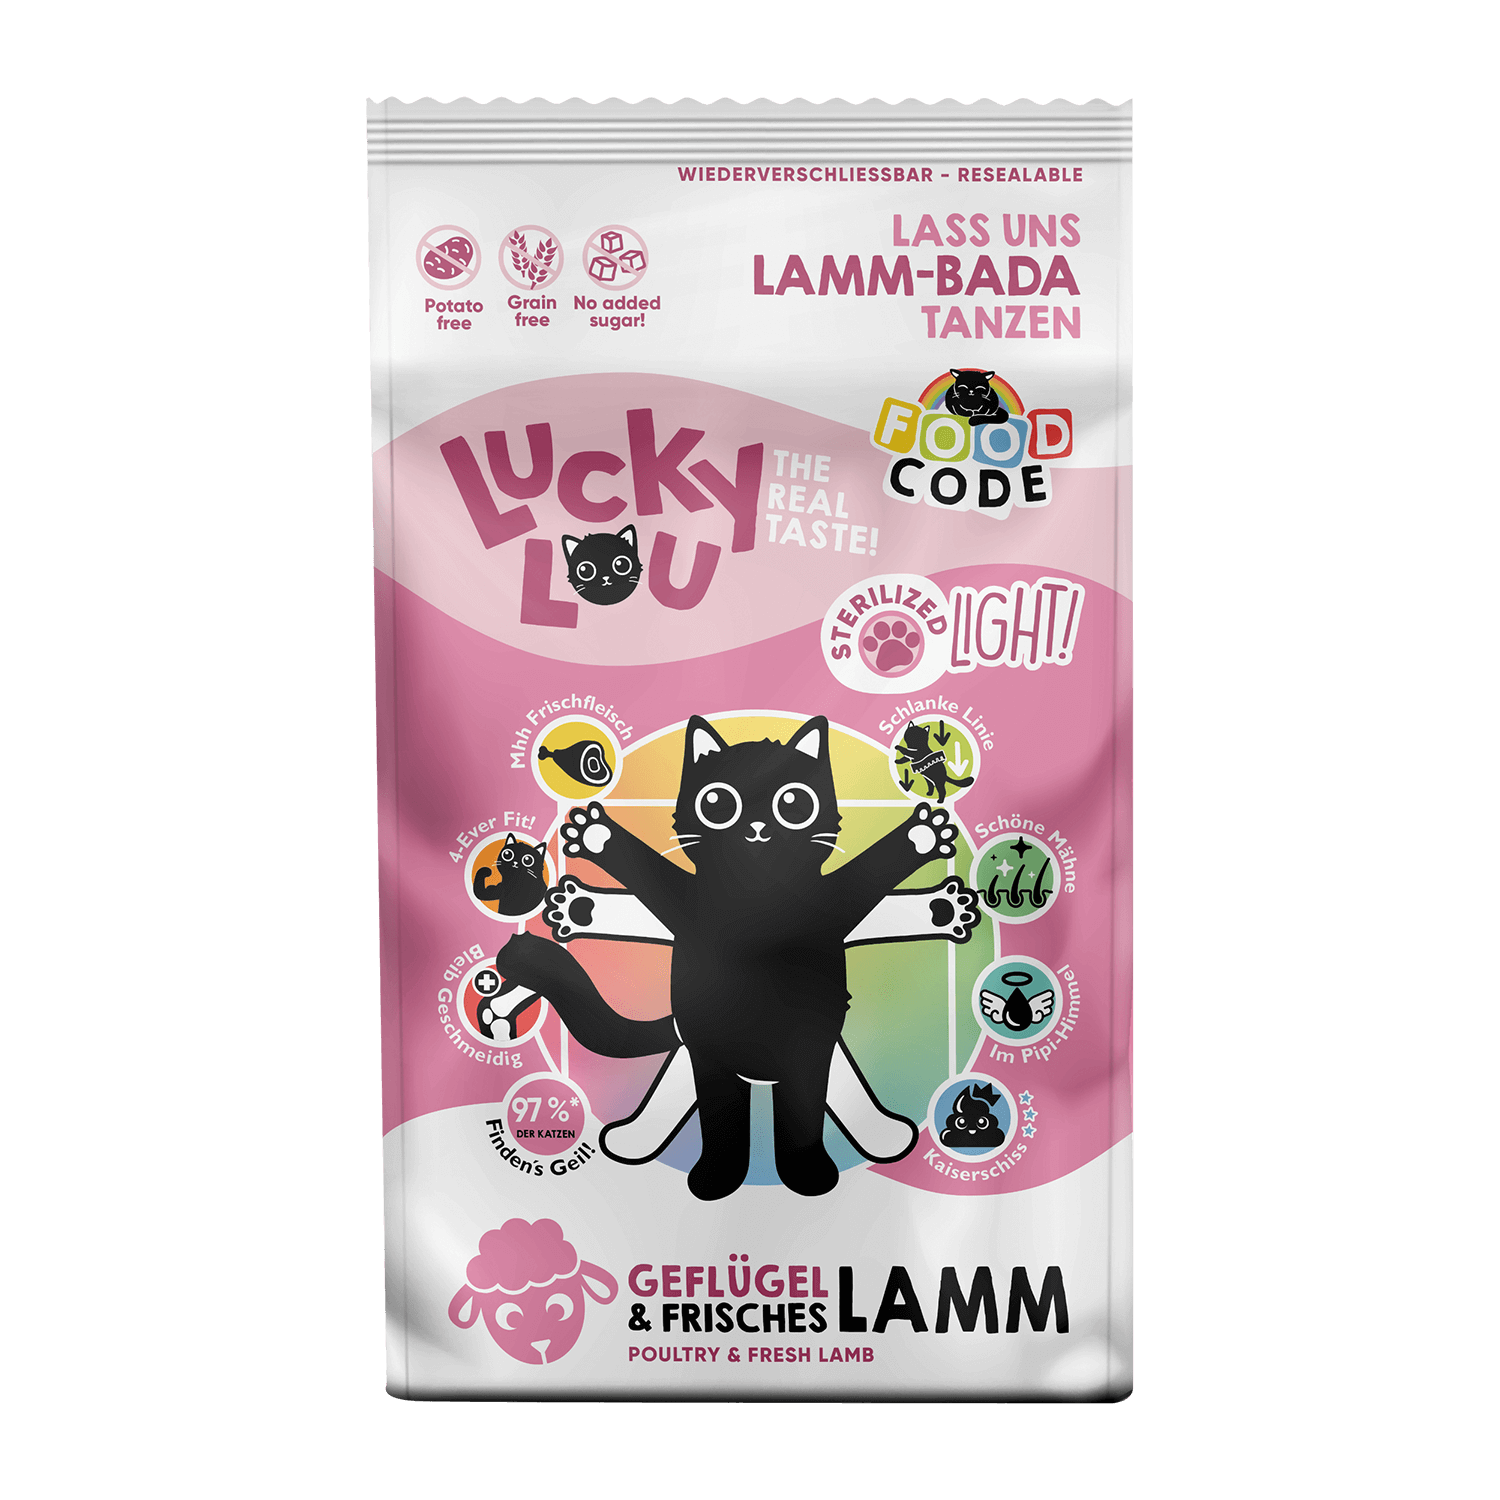 Lucky Lou Food Code Lifestage Light Geflügel & Lamm 1,7 kg